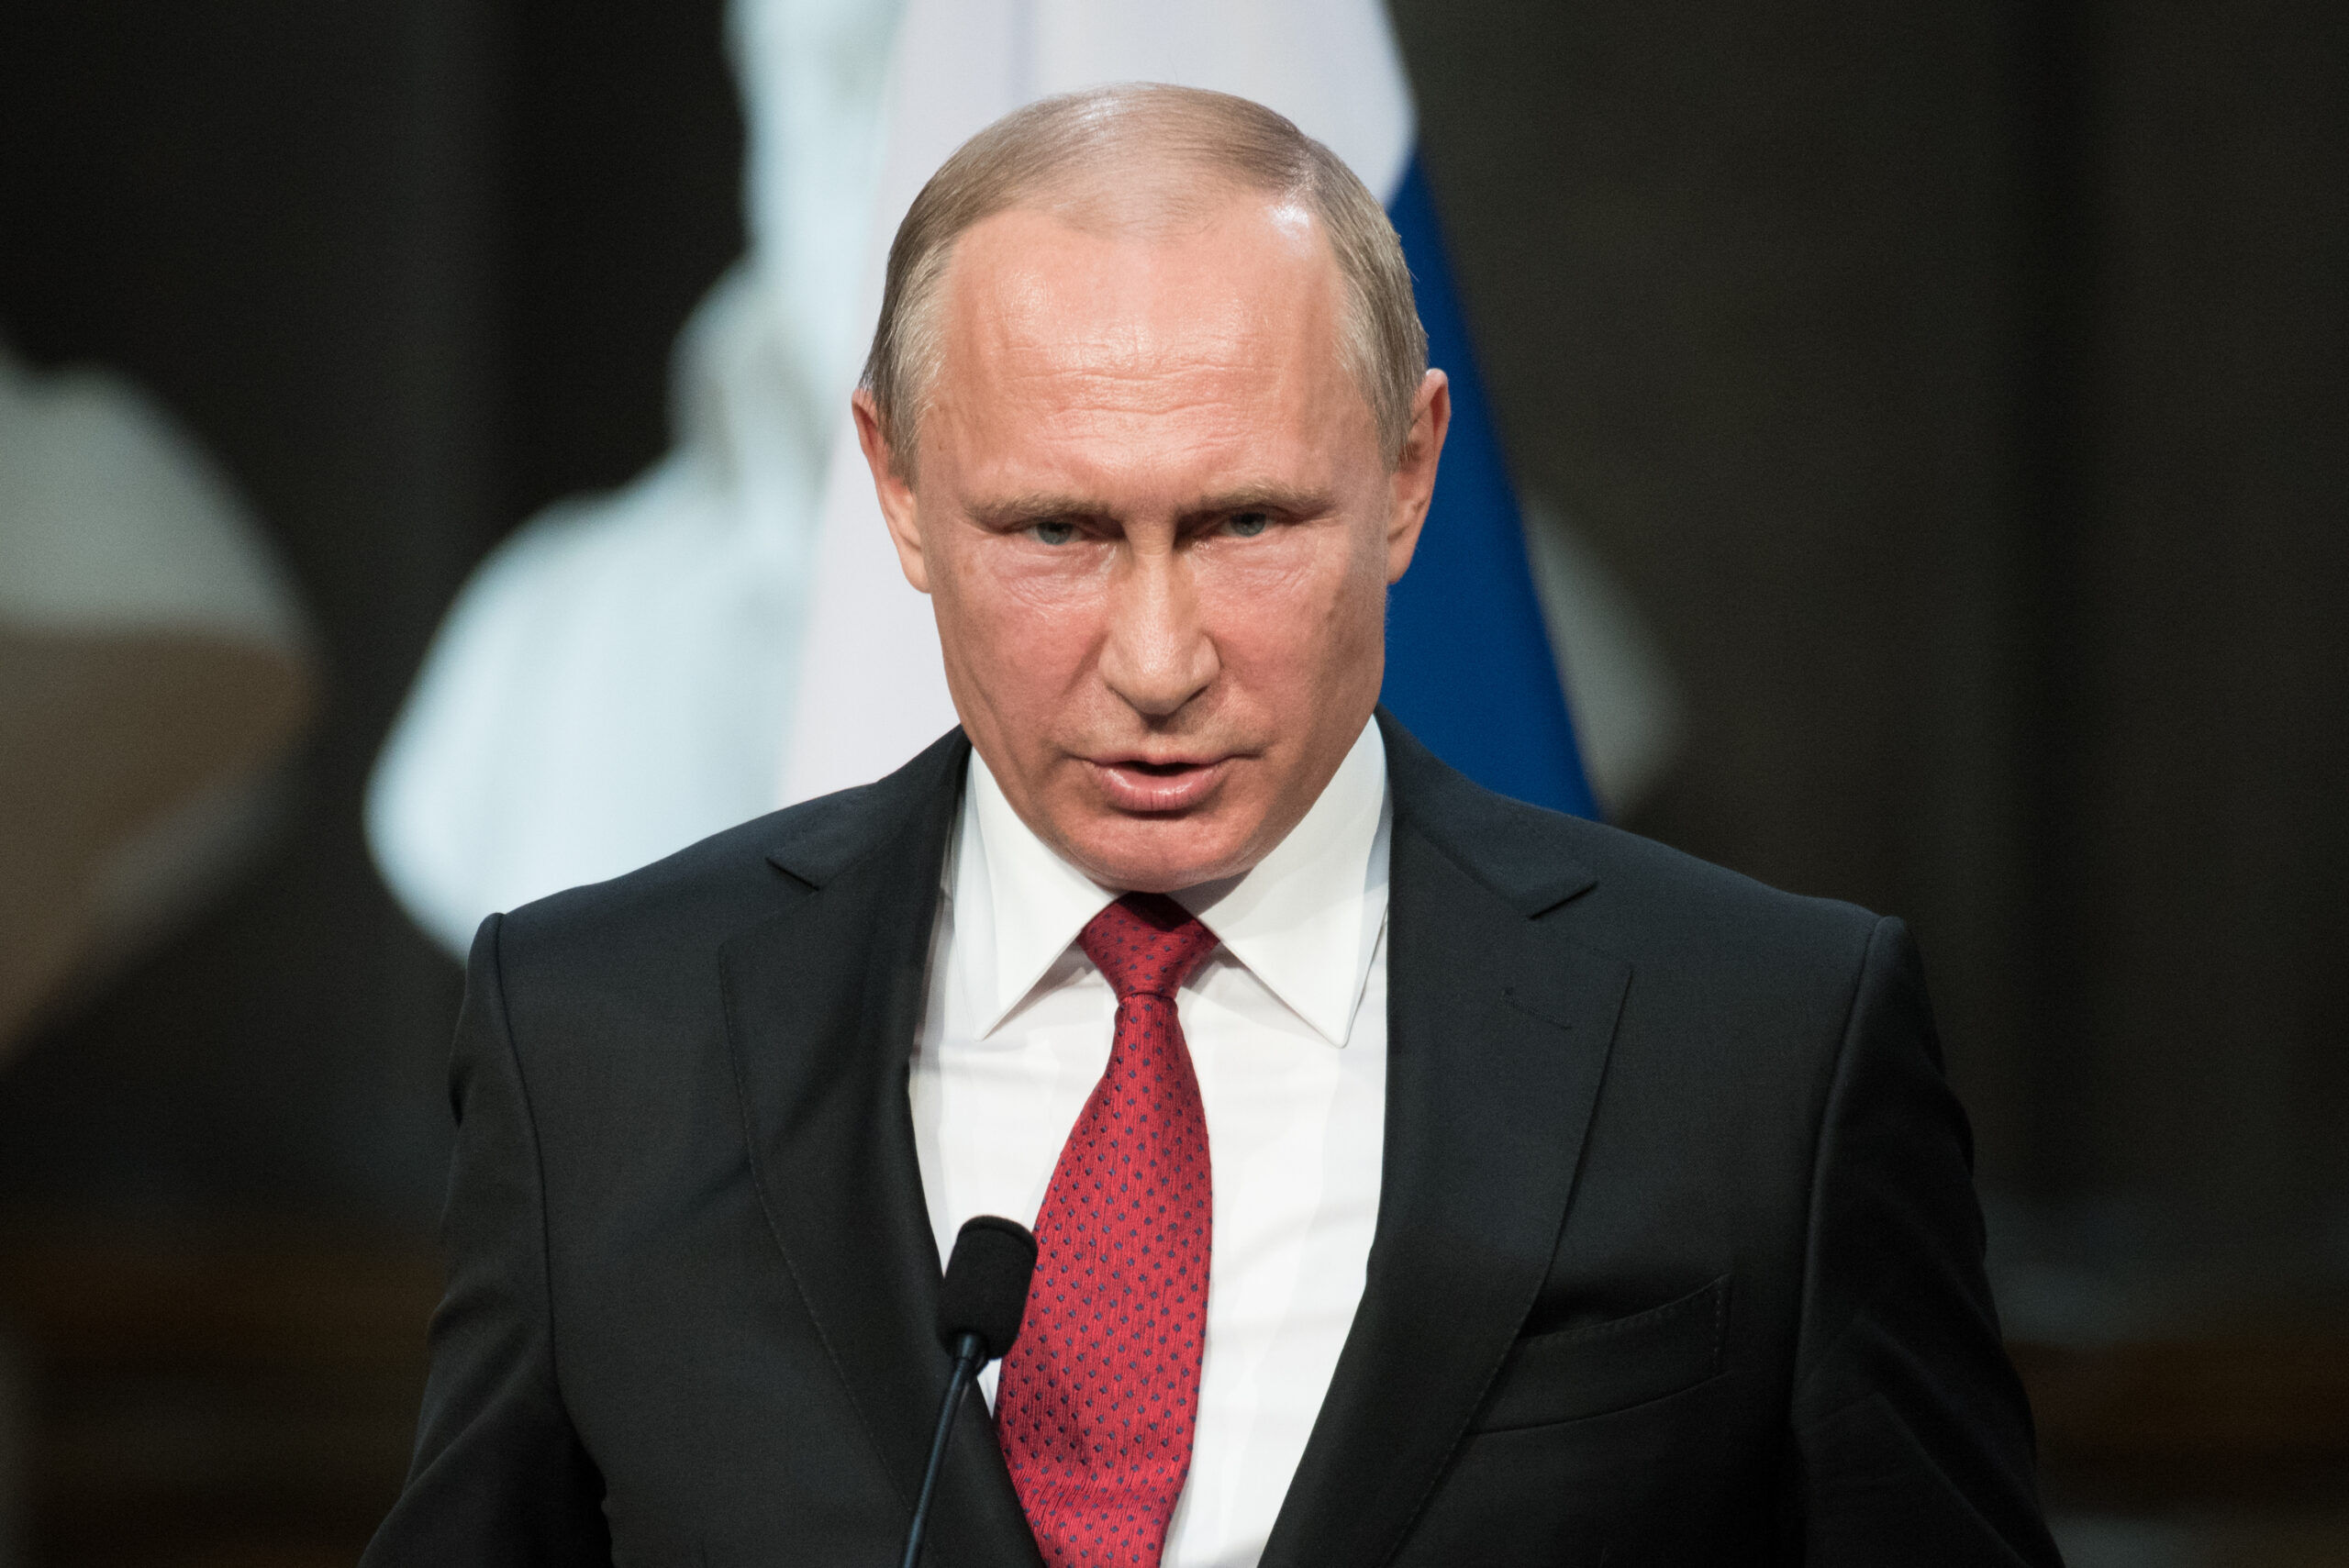 Vladimir Putin, Russian President, Ukraine, annexation speech, LGBTQ, bigot, homophobia, transphobia